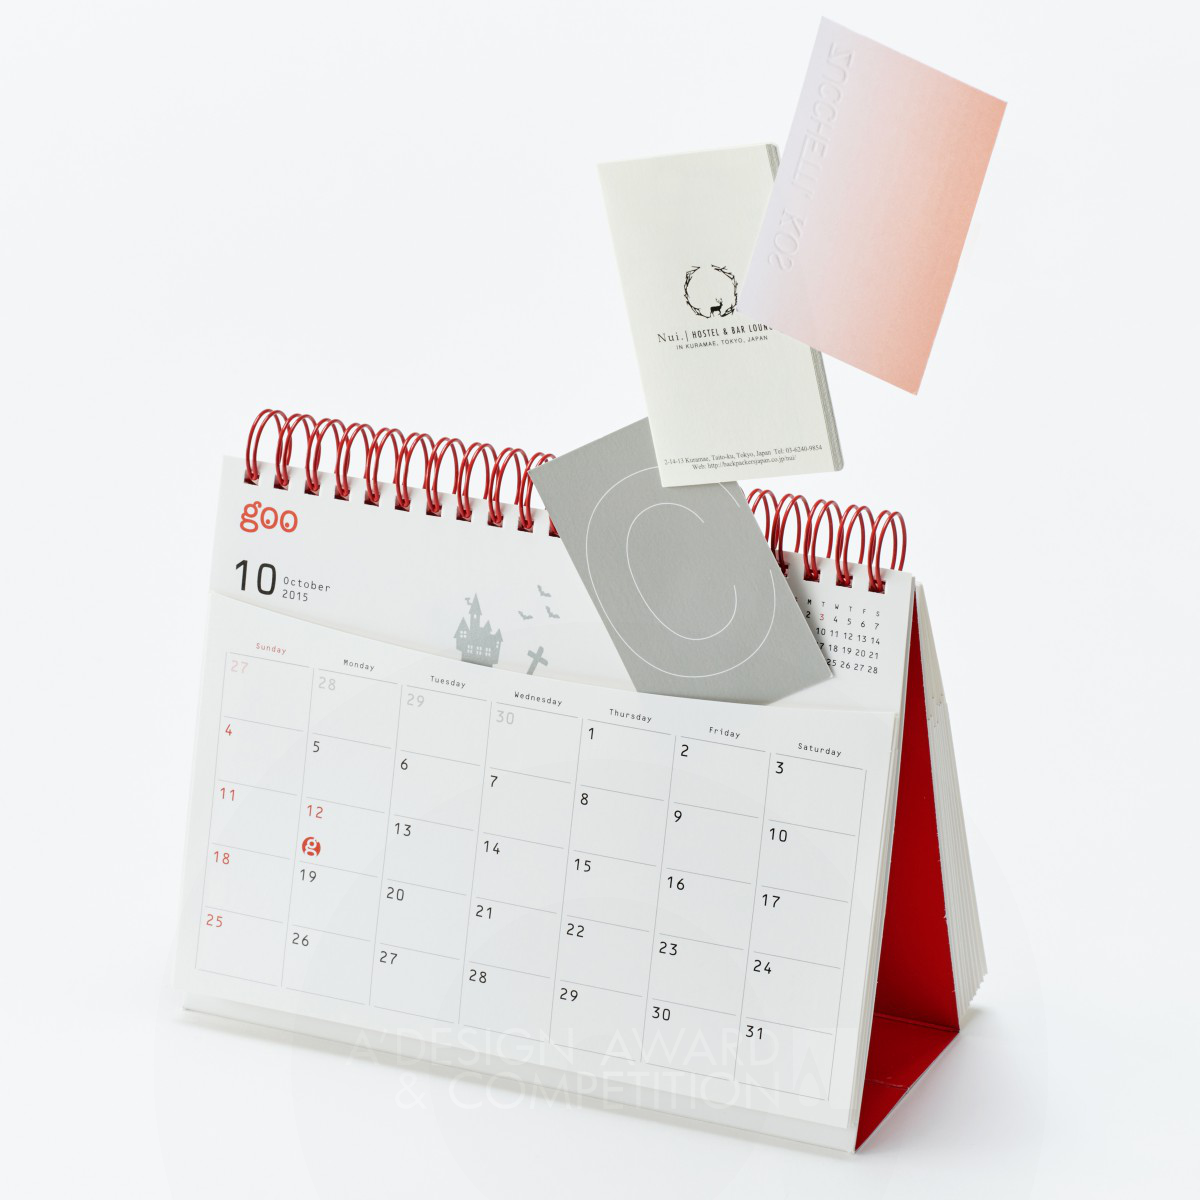 Happy Pockets Calendar by Katsumi Tamura Silver Graphics, Illustration and Visual Communication Design Award Winner 2015 